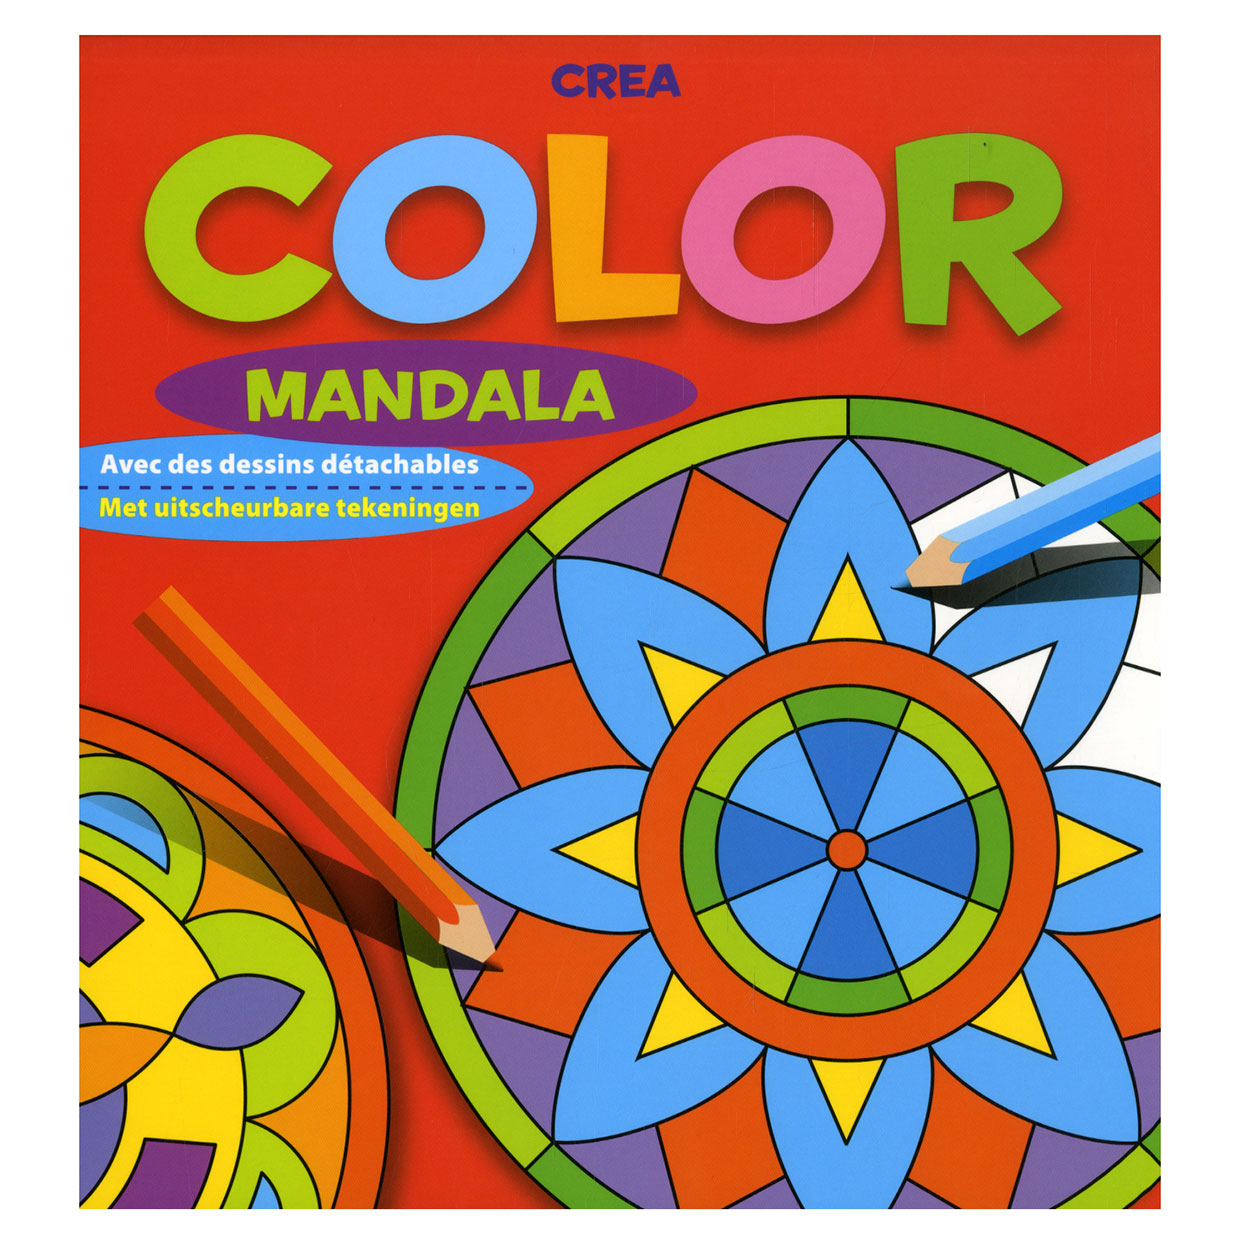 Mandala de couleur